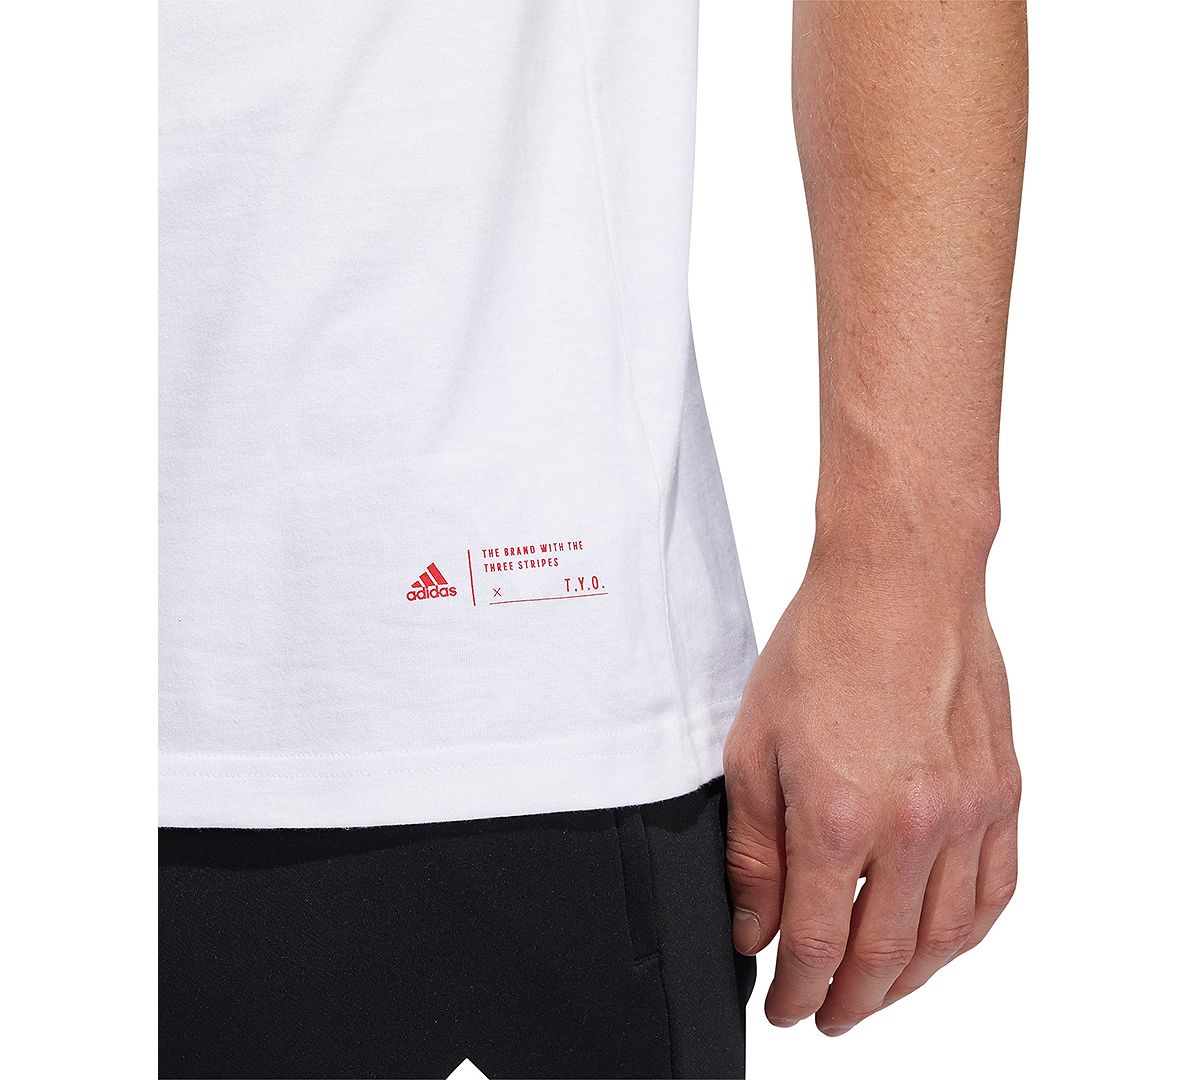 Adidas Badge Of Sports Tokyo Lc Kanji Logo Graphic T-shirt White/Red